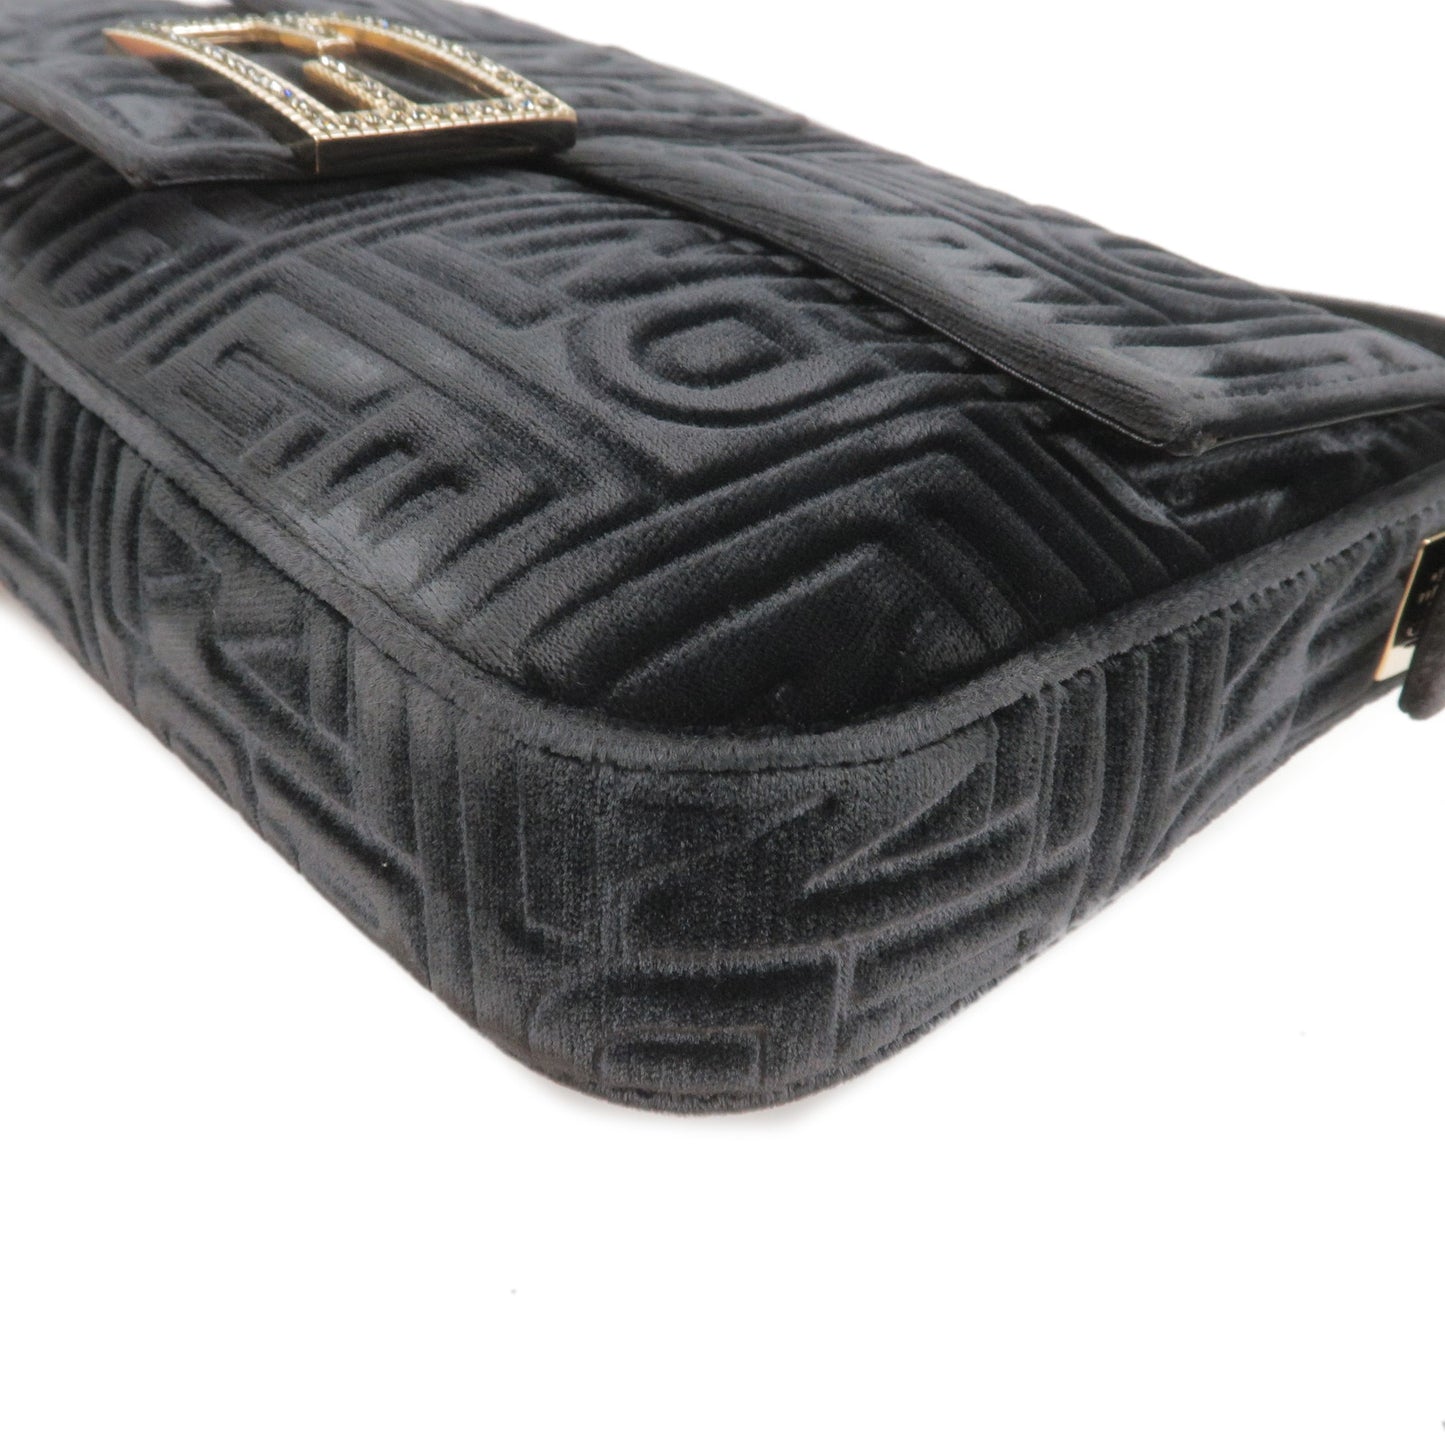 FENDI Velour Leather Rhinestone Mamma Baguette Bag 8BR600